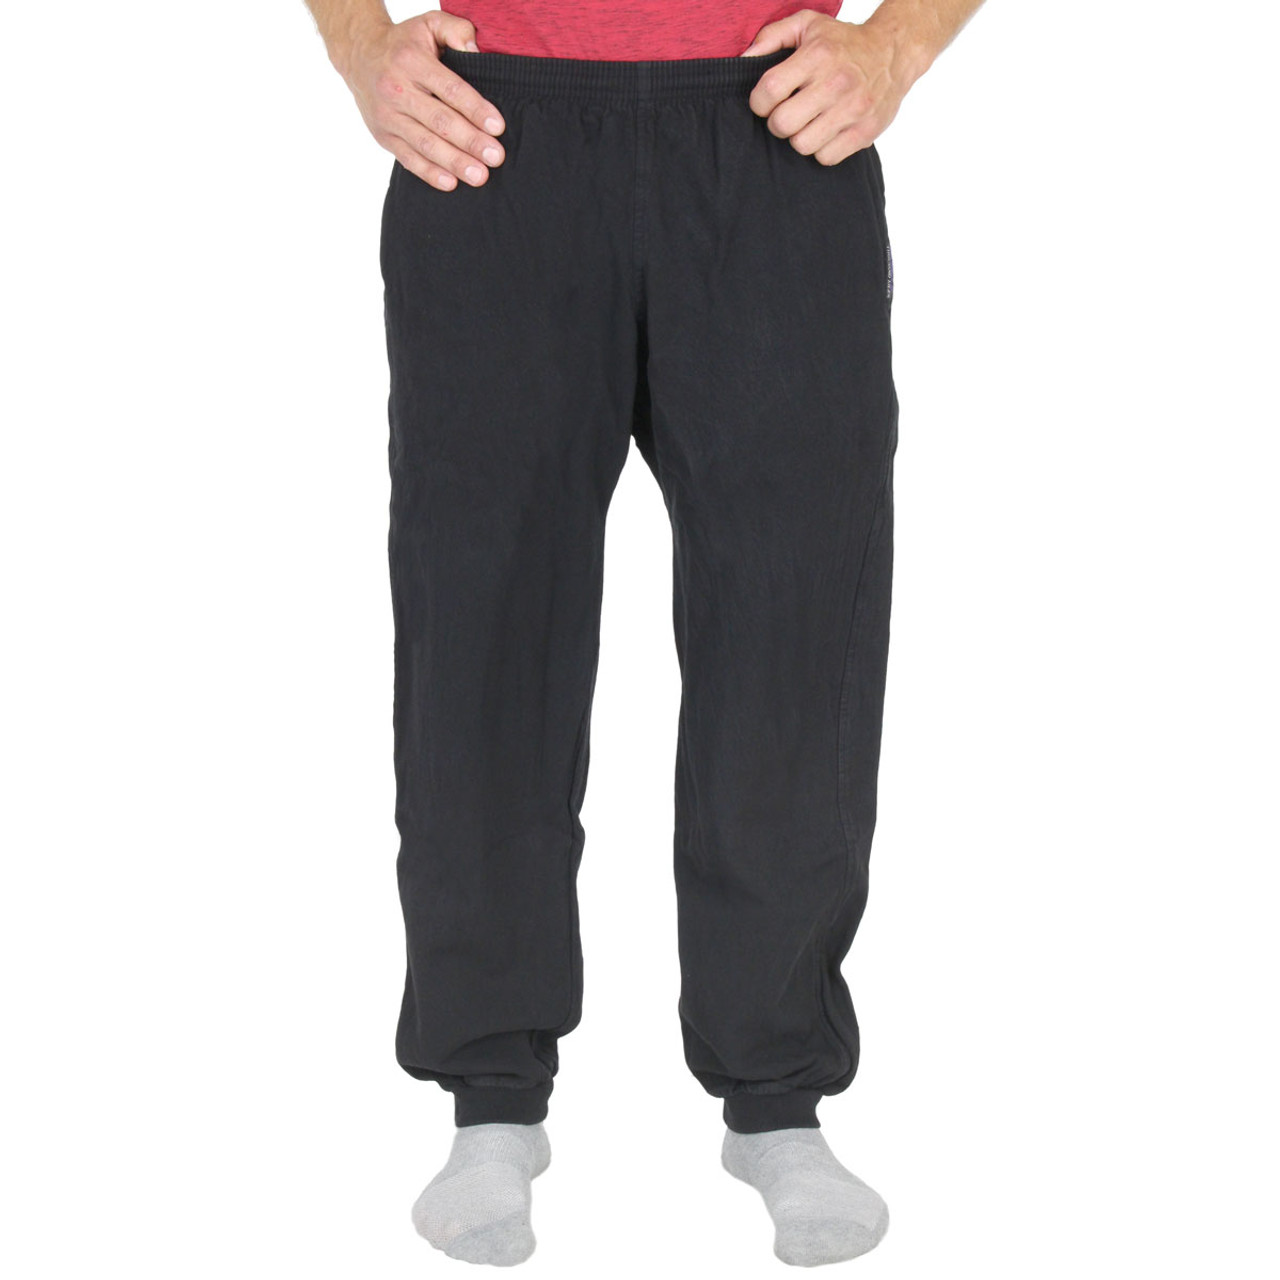 Buy Men's Track Pants - Stylish and Comfortable Sports and Gym Pants |  Ramraj Cotton